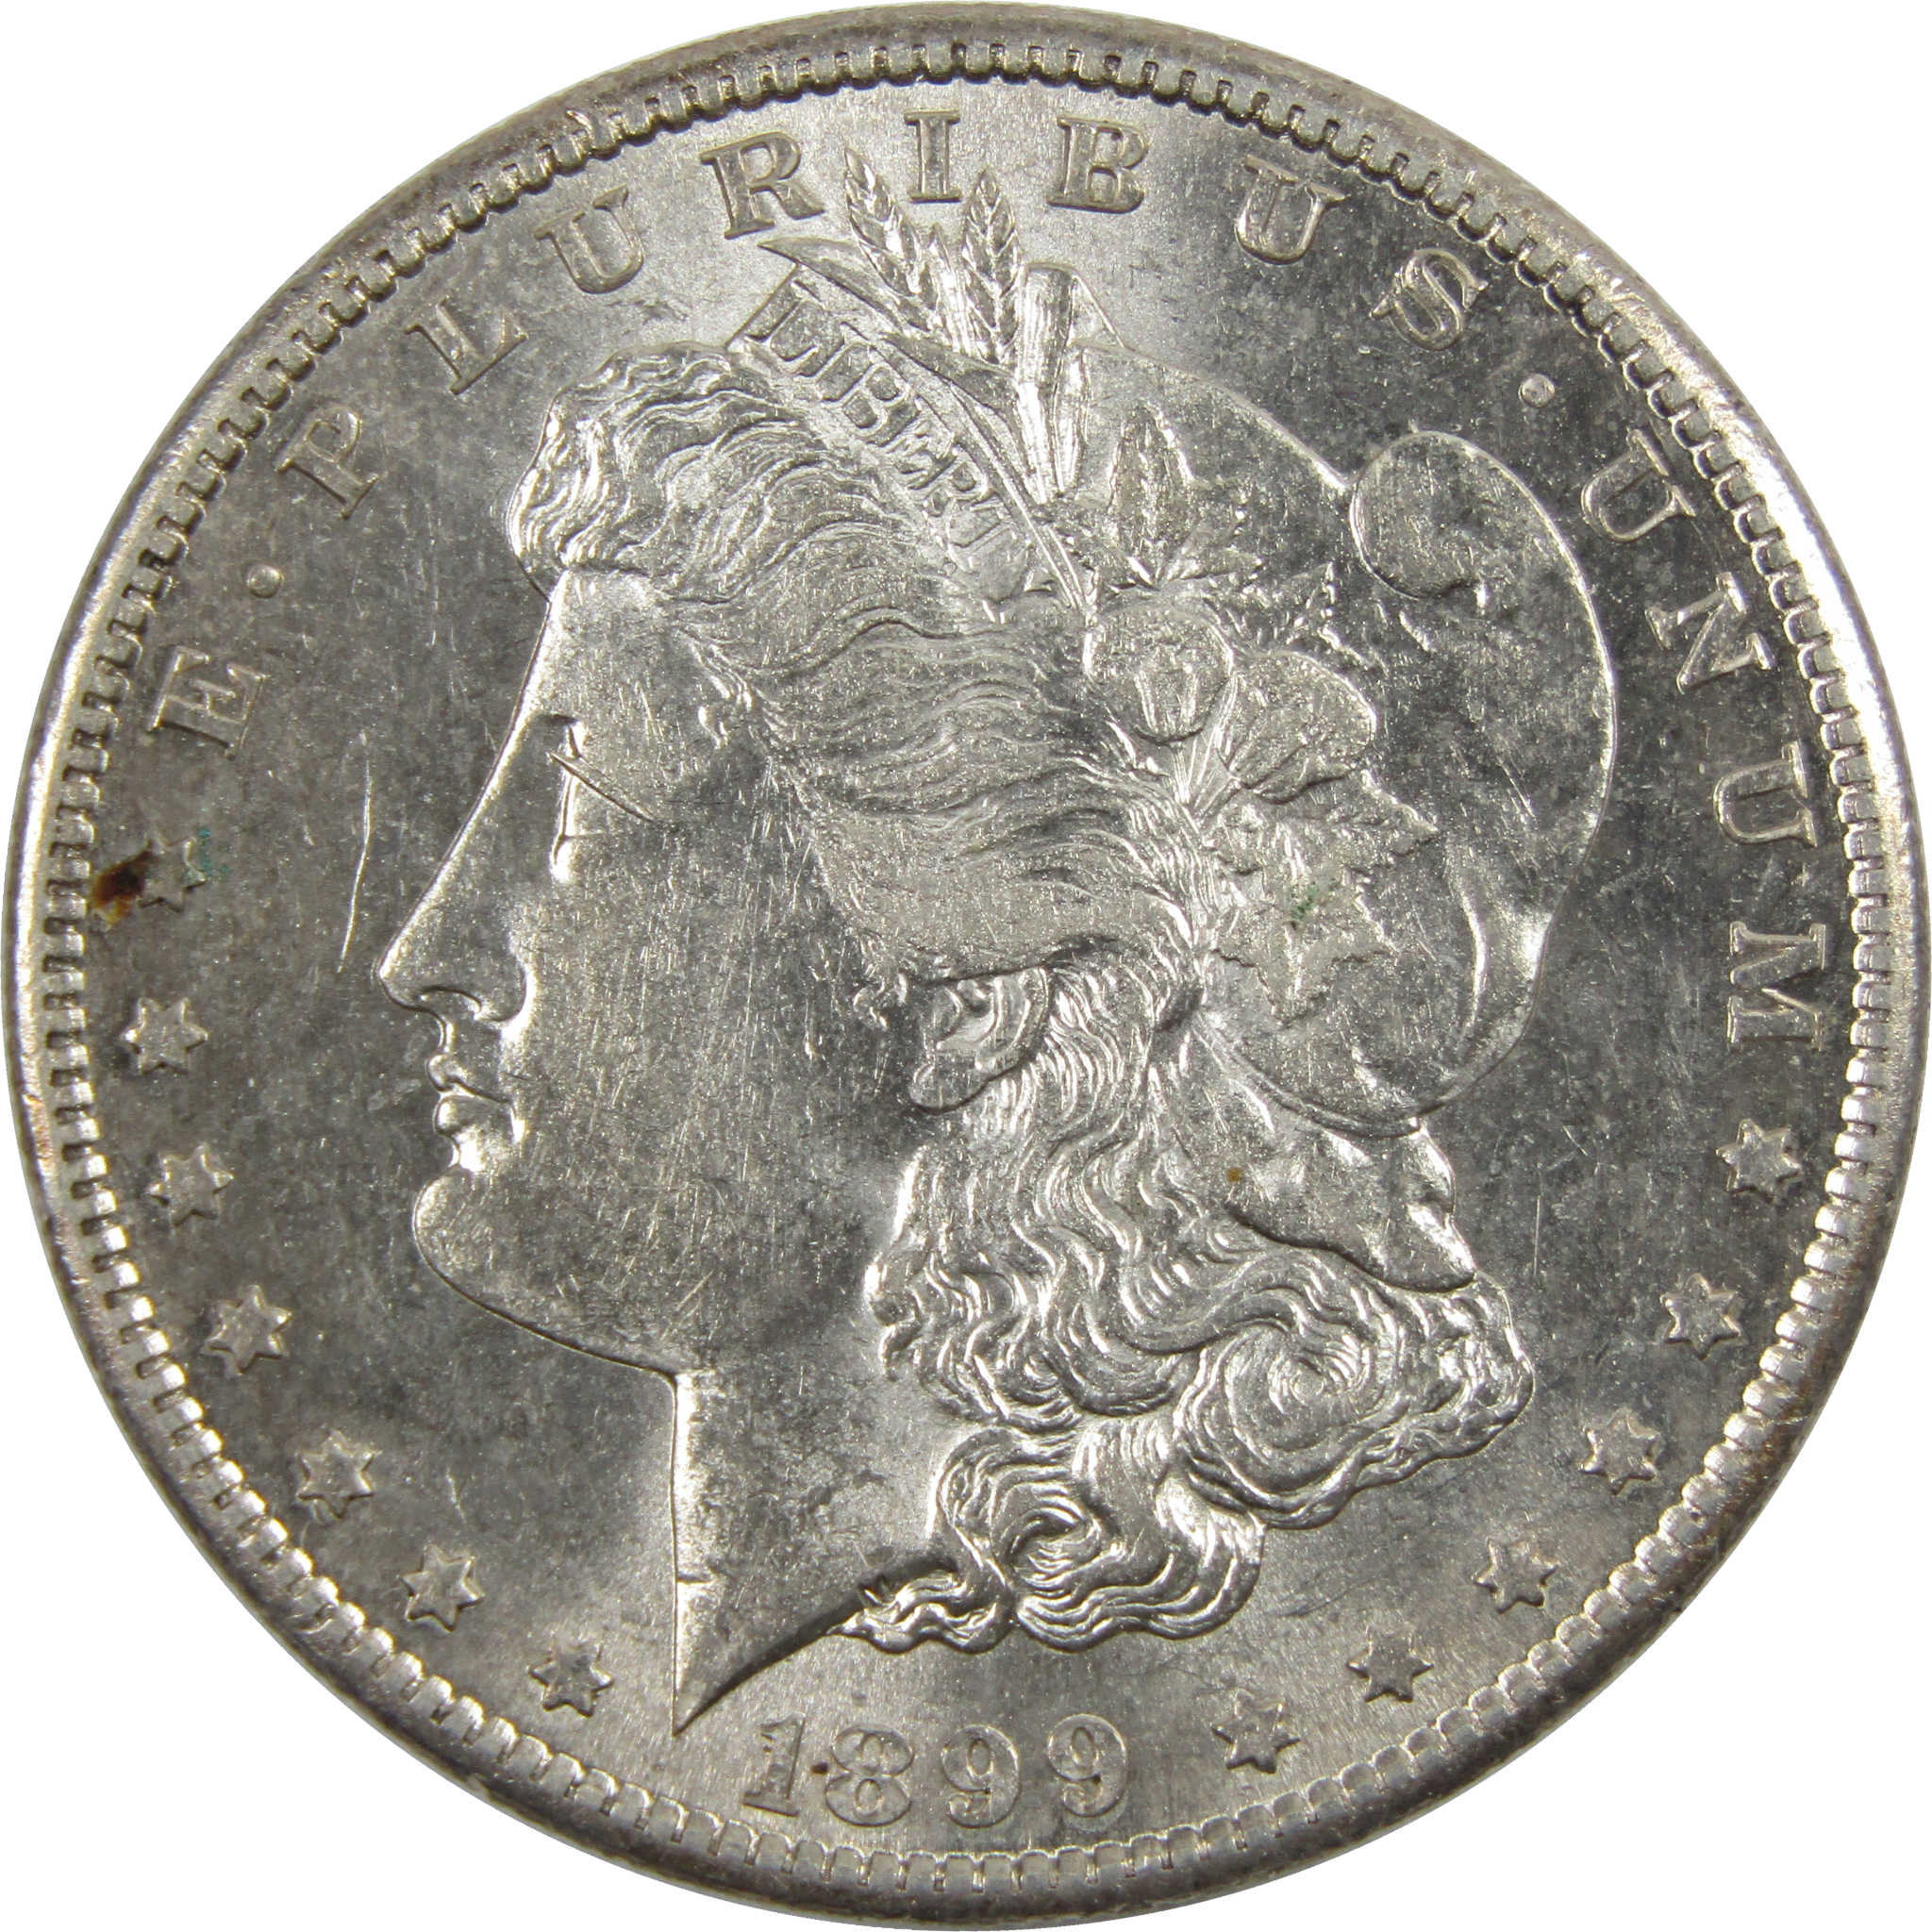 1899 S Morgan Dollar Borderline Uncirculated 90% Silver $1 SKU:I6073 - Morgan coin - Morgan silver dollar - Morgan silver dollar for sale - Profile Coins &amp; Collectibles